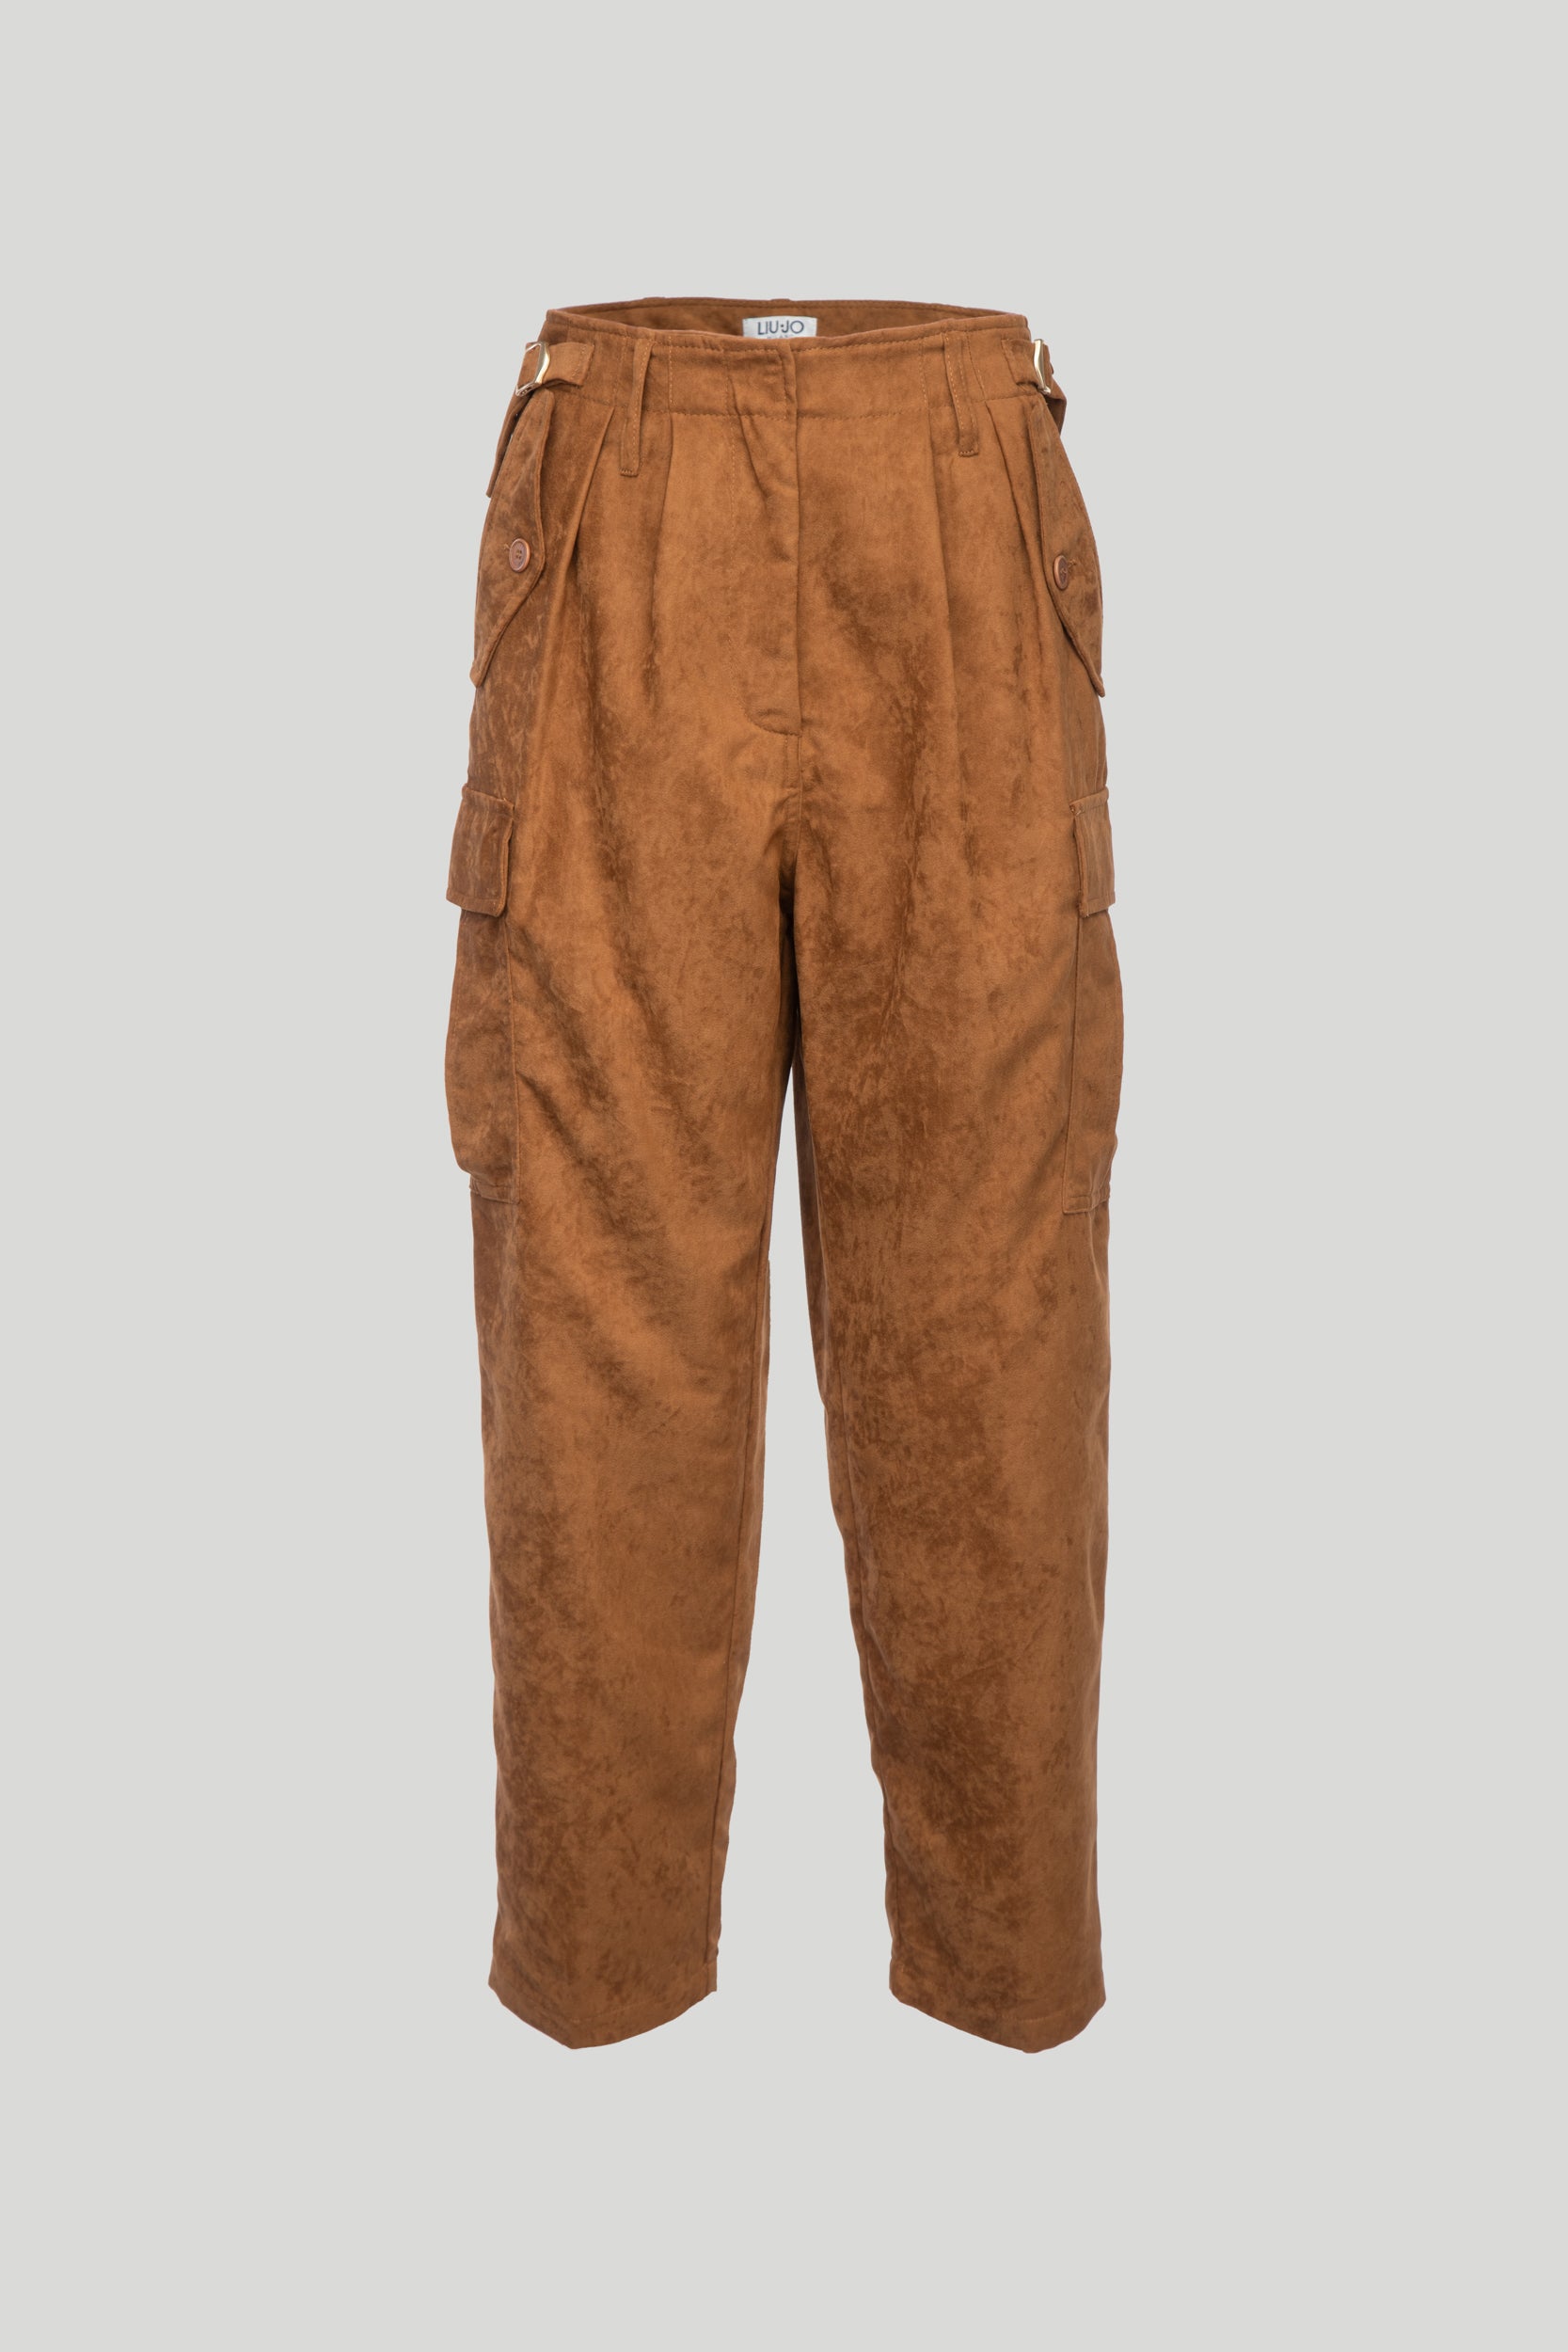 LIU JO Brown Cargo Pants